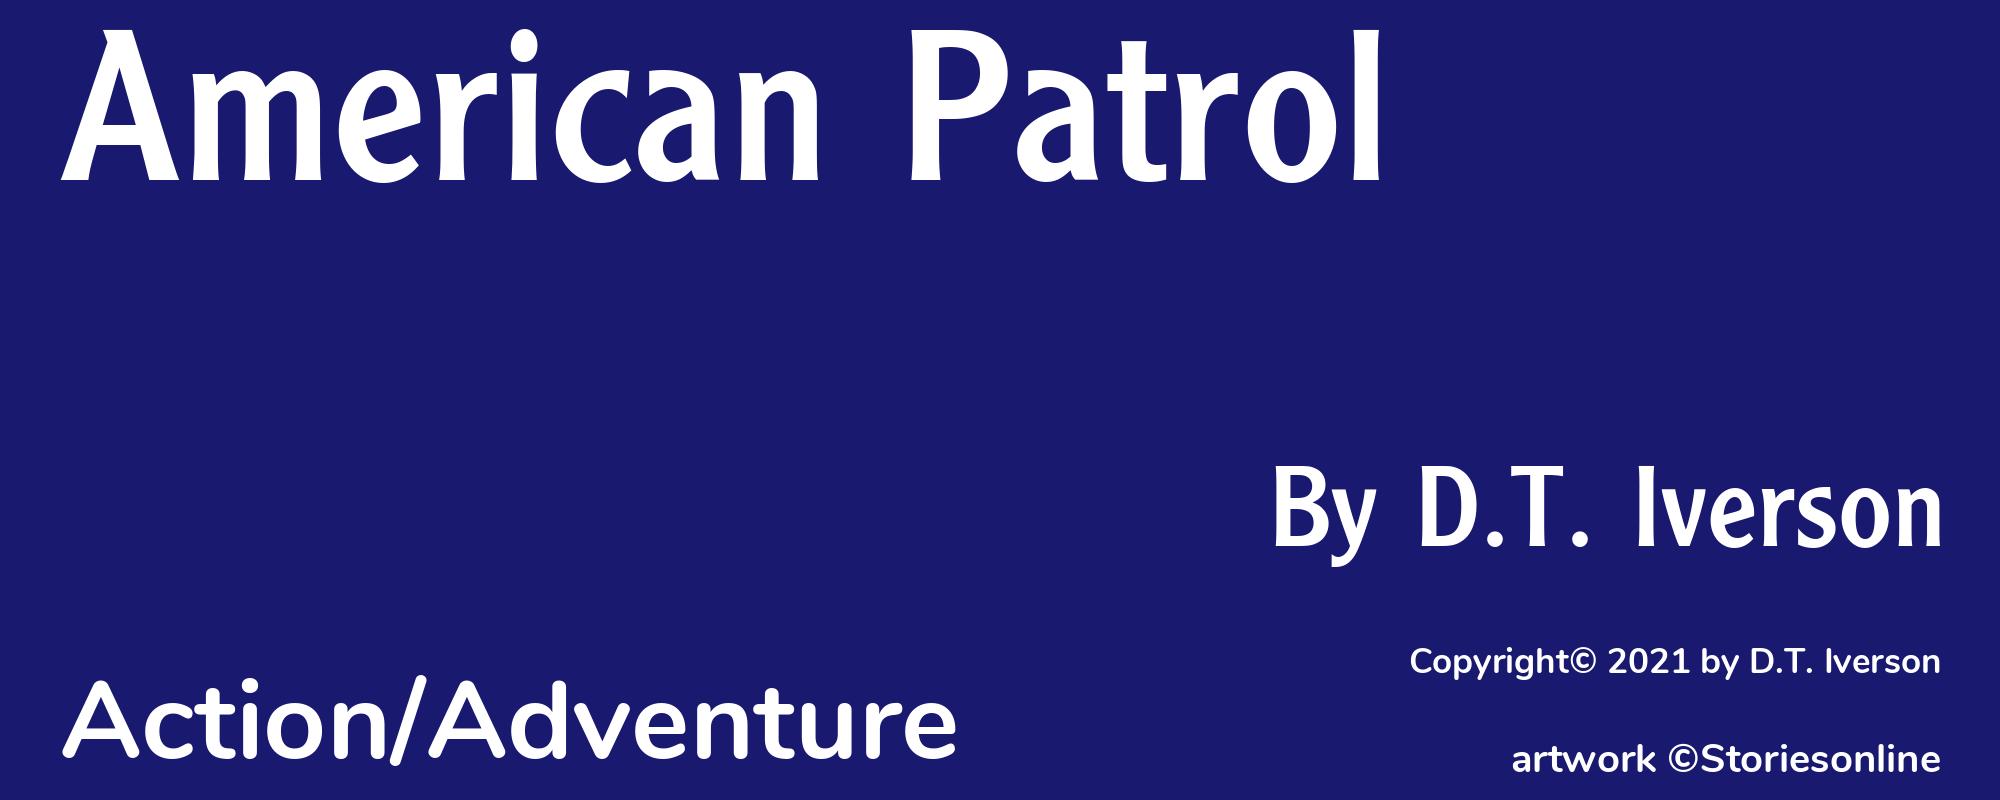 American Patrol - Cover